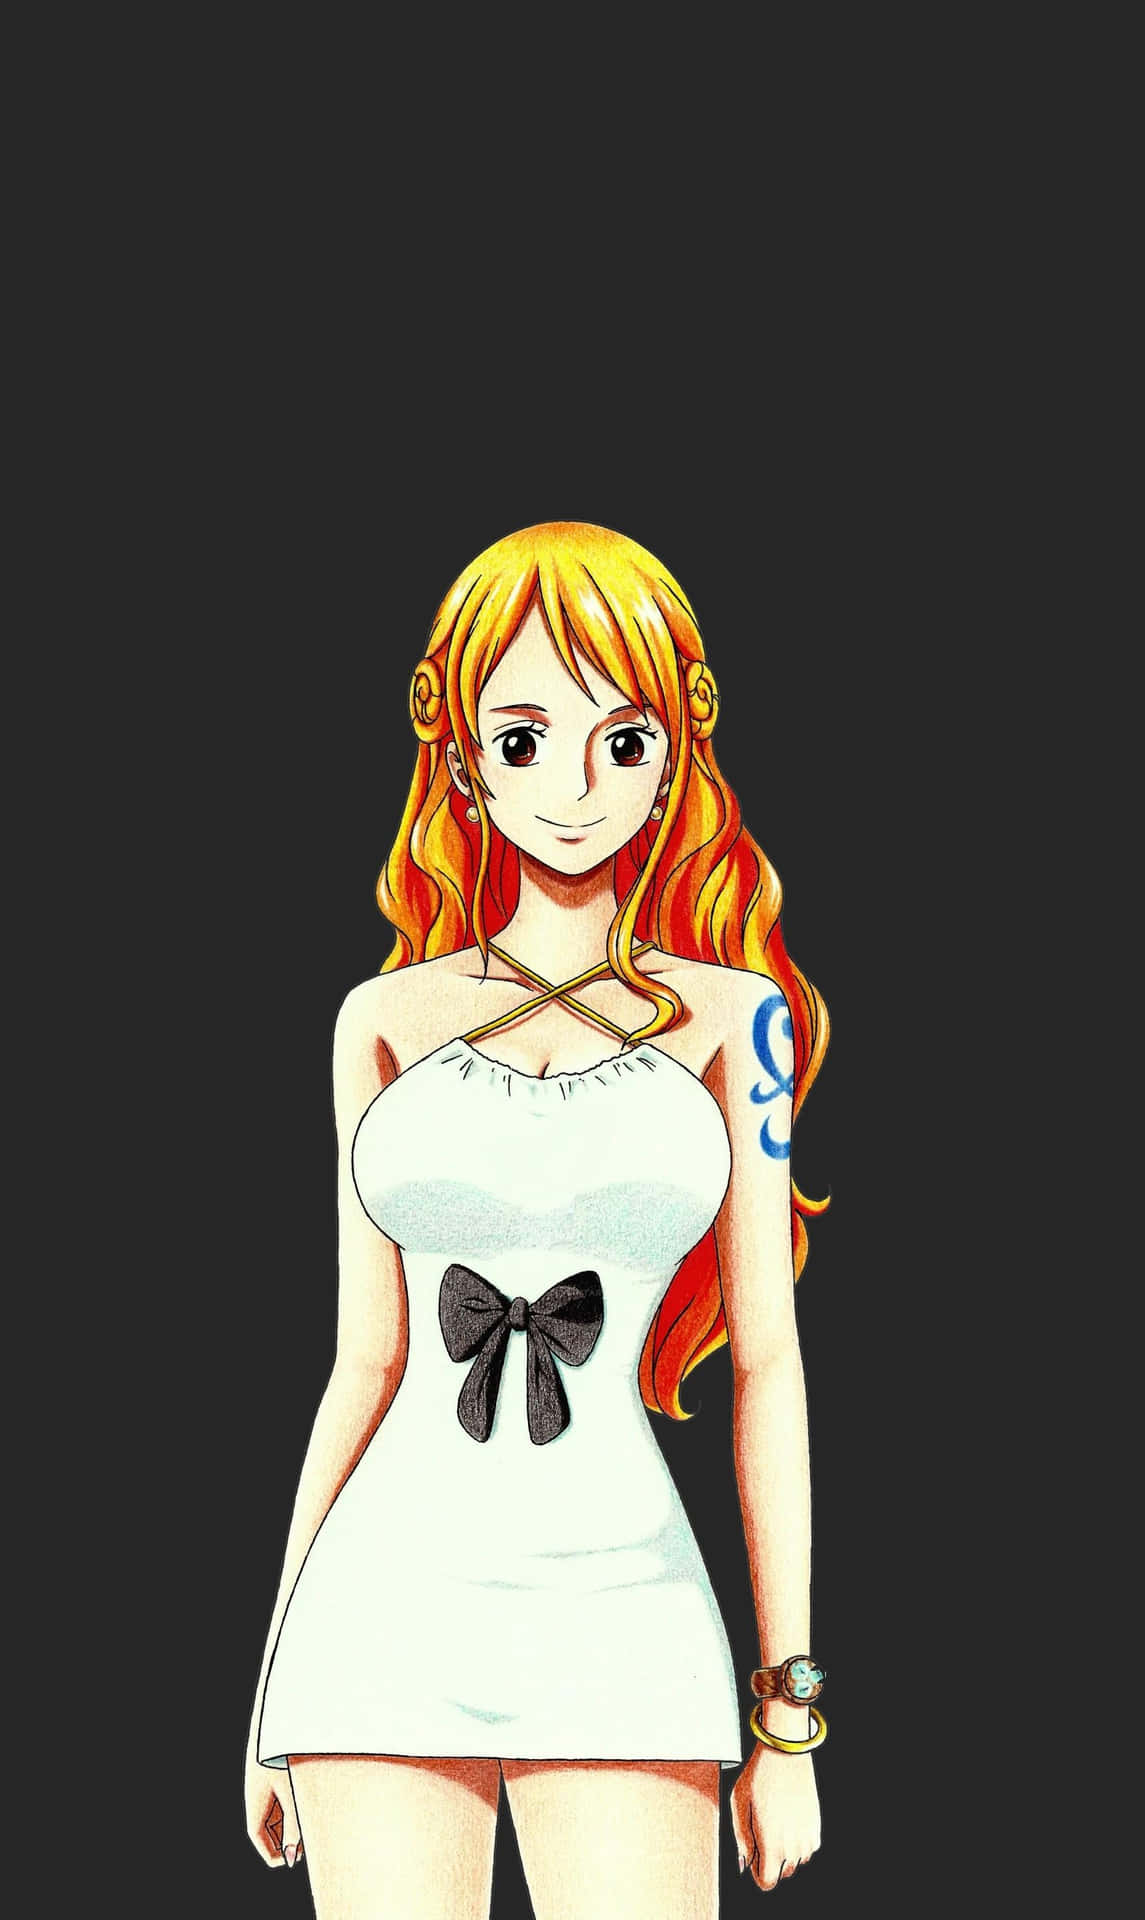 Nami One Piece In White Mini Dress Wallpaper